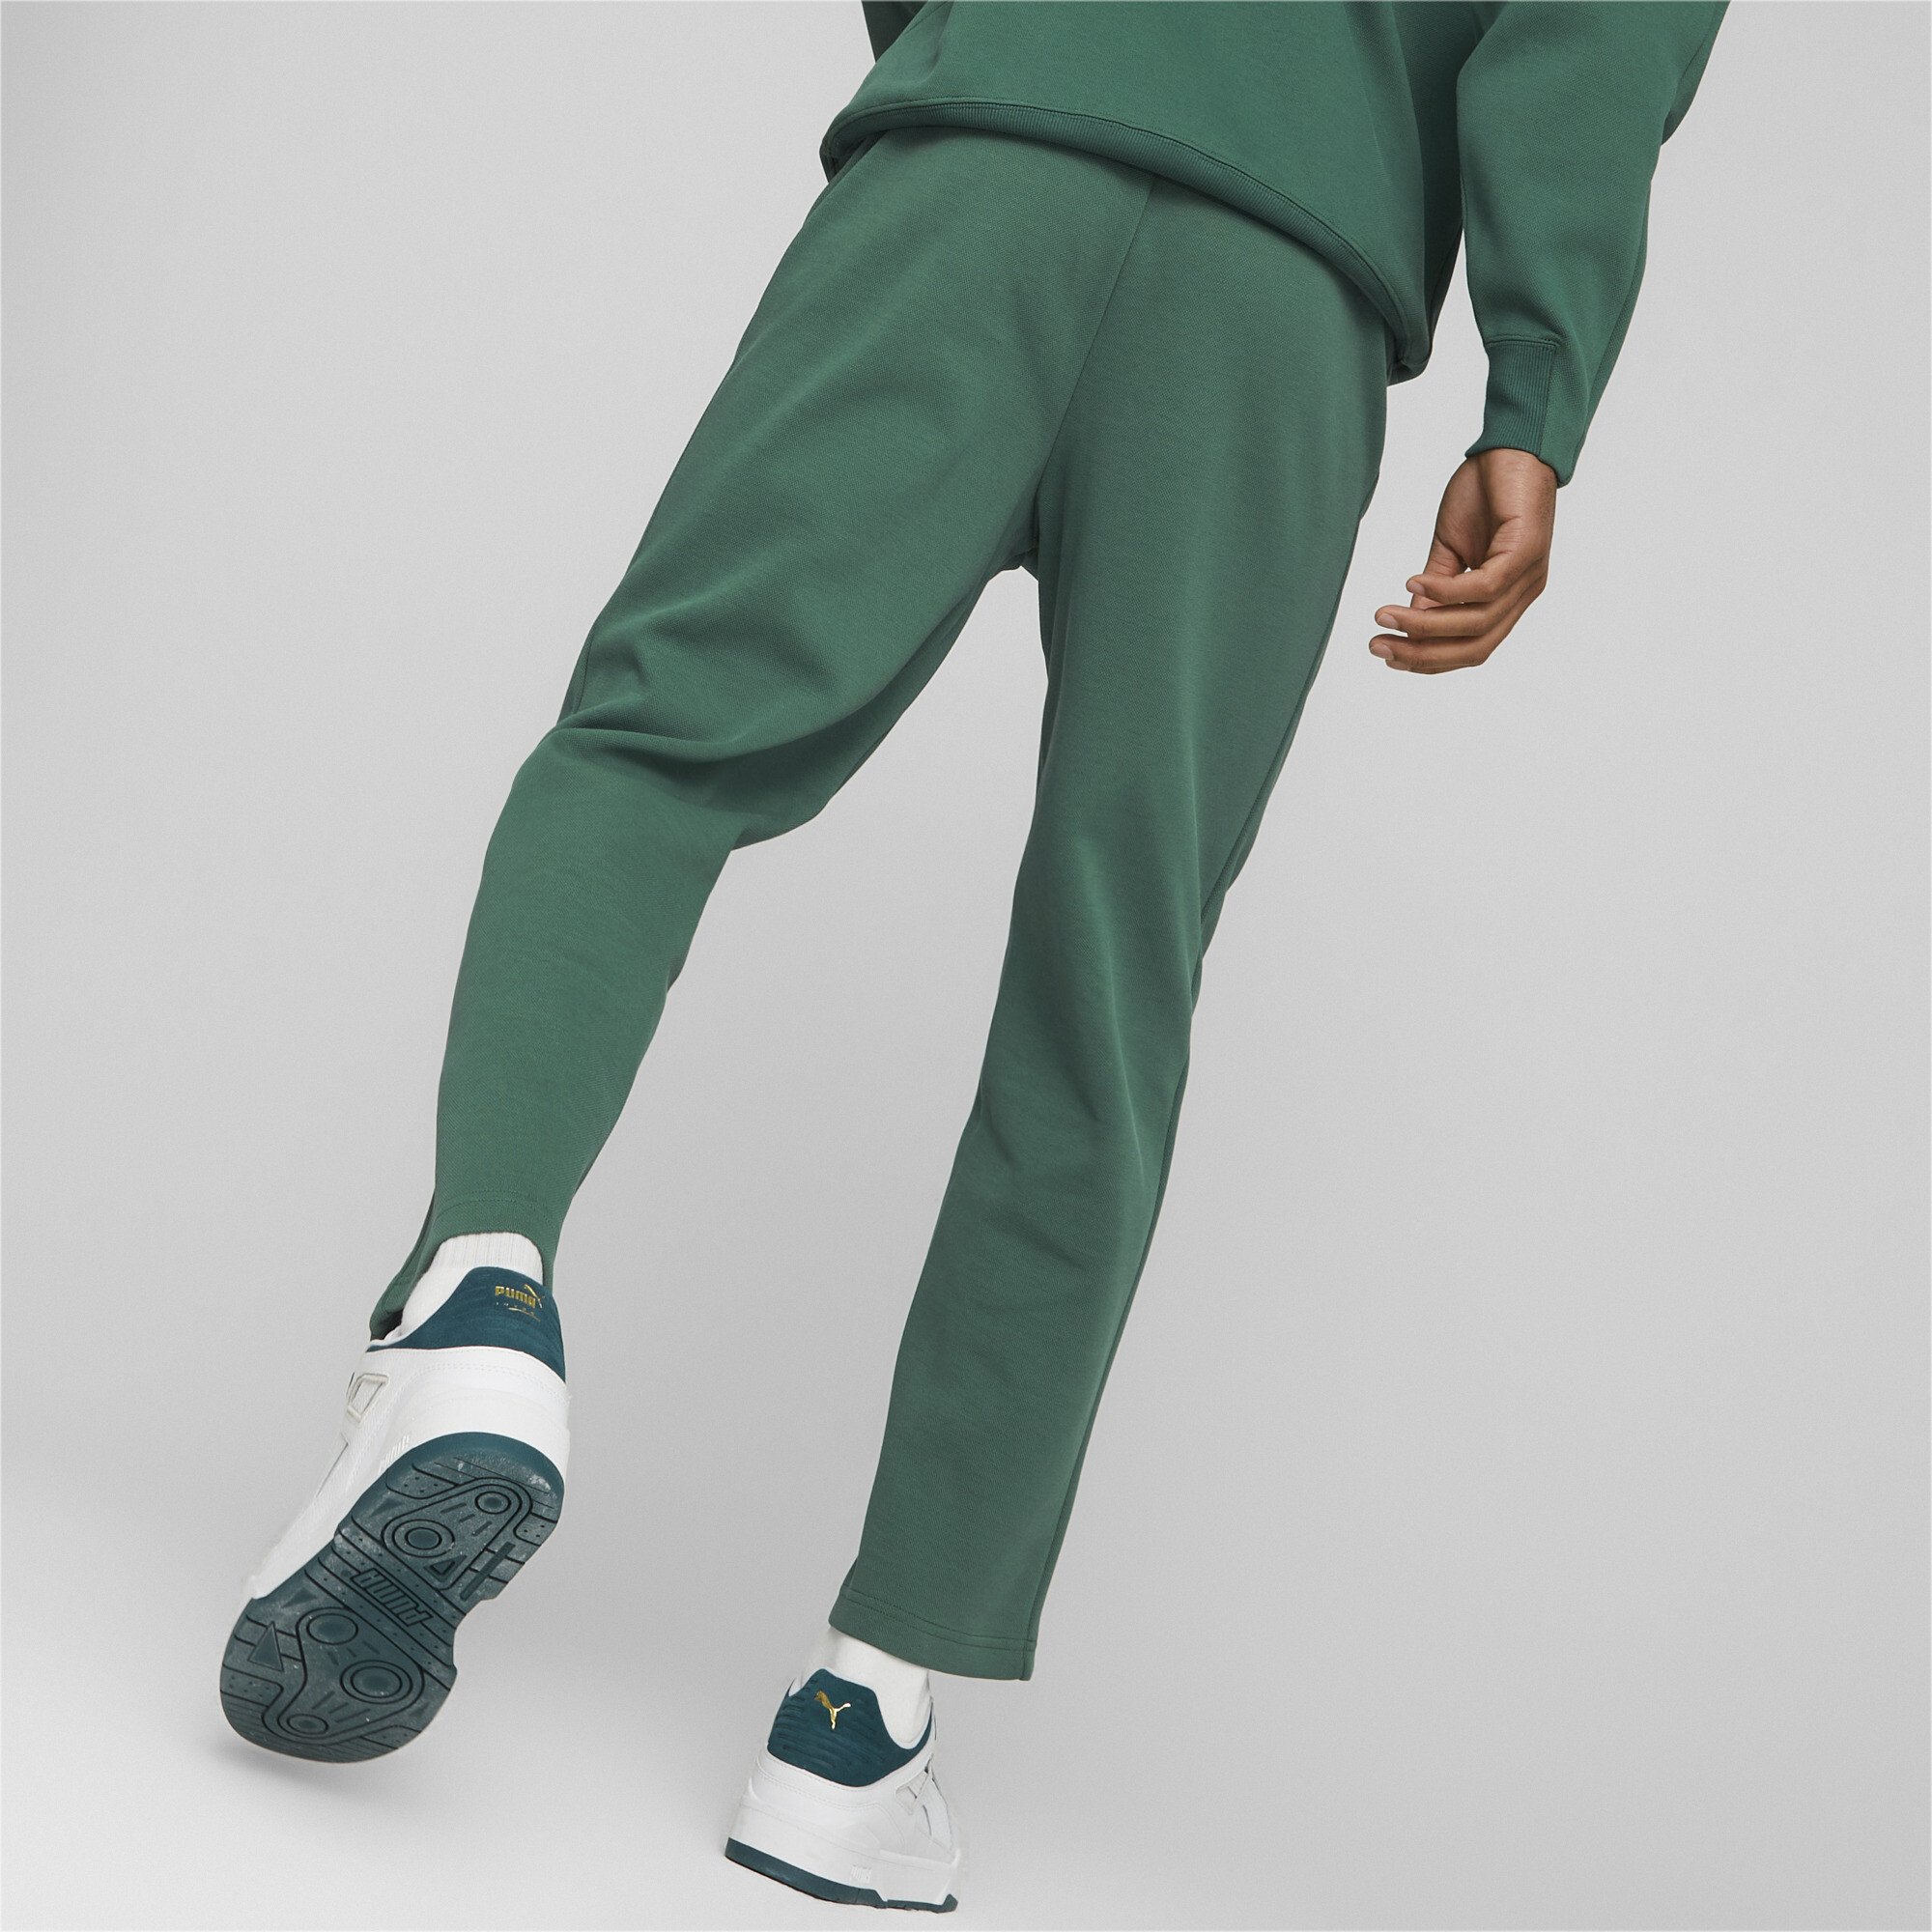 Men's PUMA T7 Track Pants Men In Green, Size Small